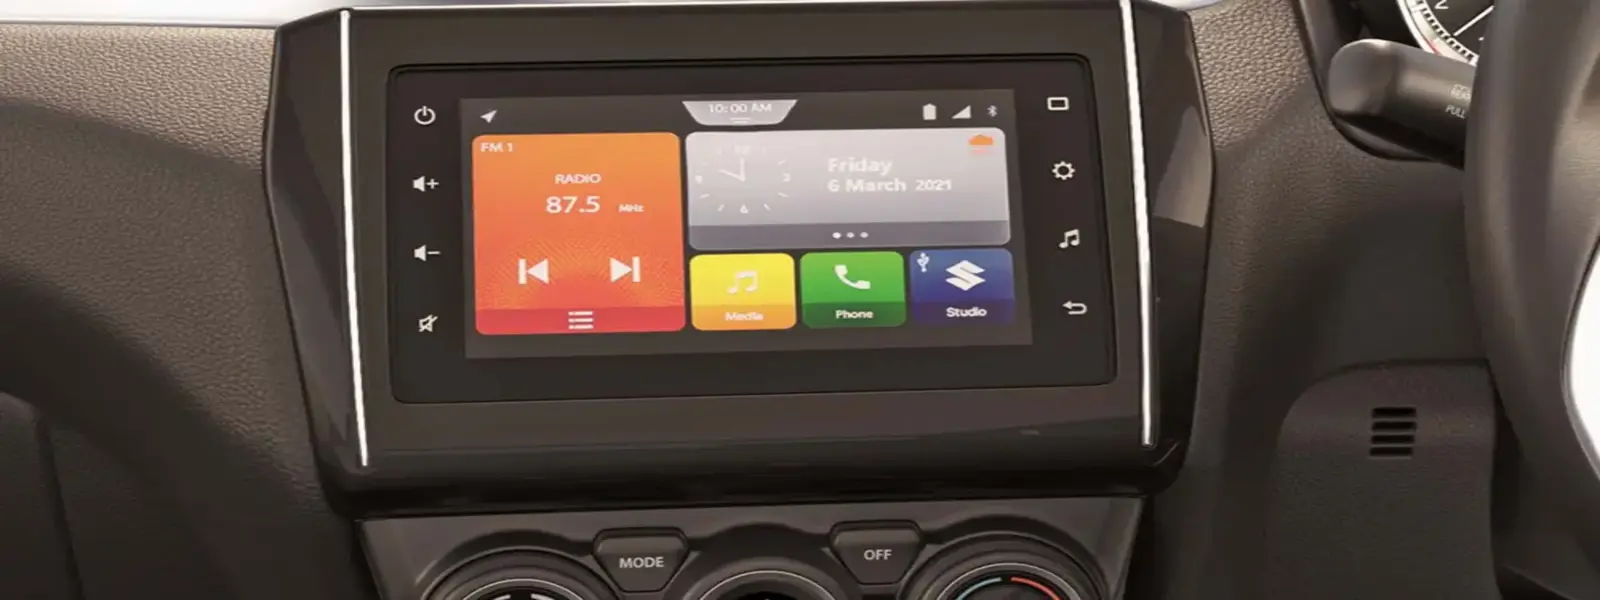 Swift- SmartPlay Infotainment System Daga Motors Kolar, Bhopal